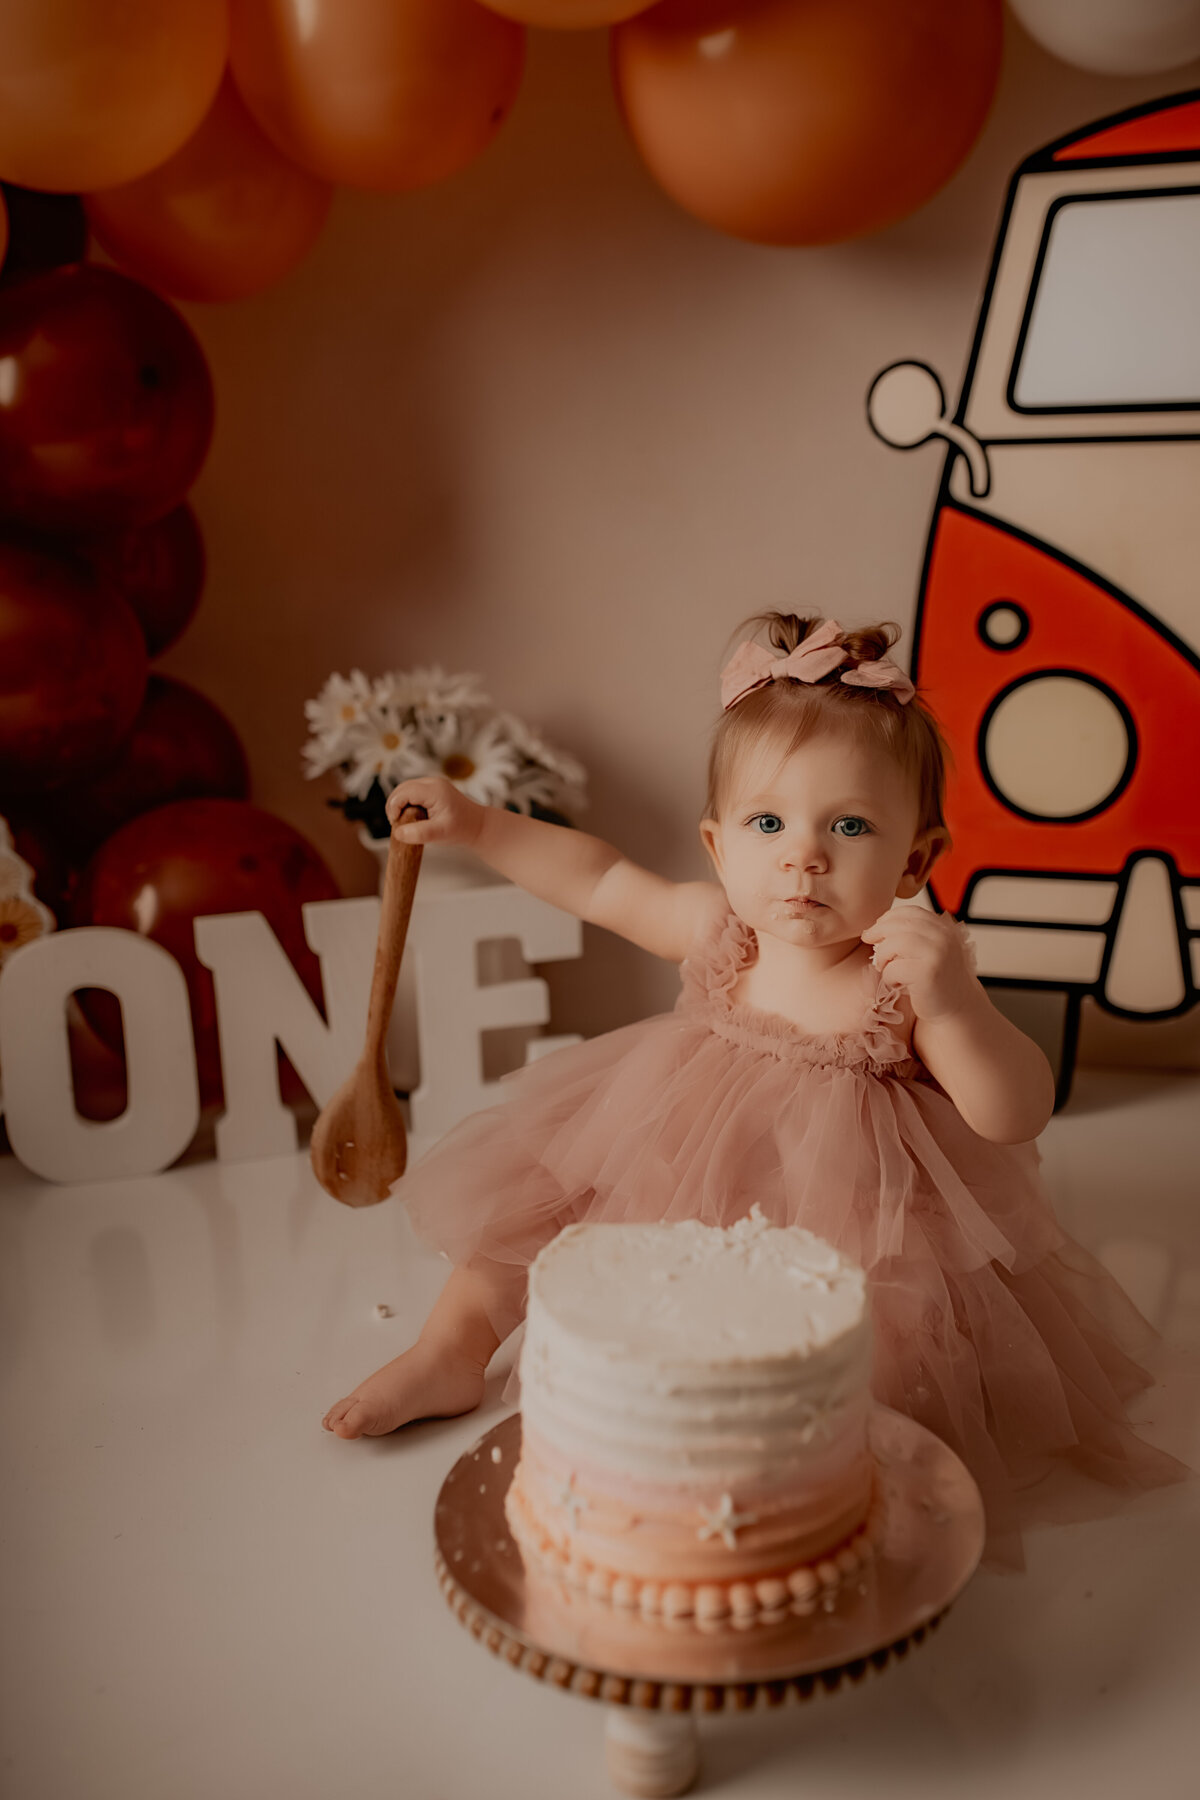 Atascocita, Tx little girl holding a spoon eating cake photo